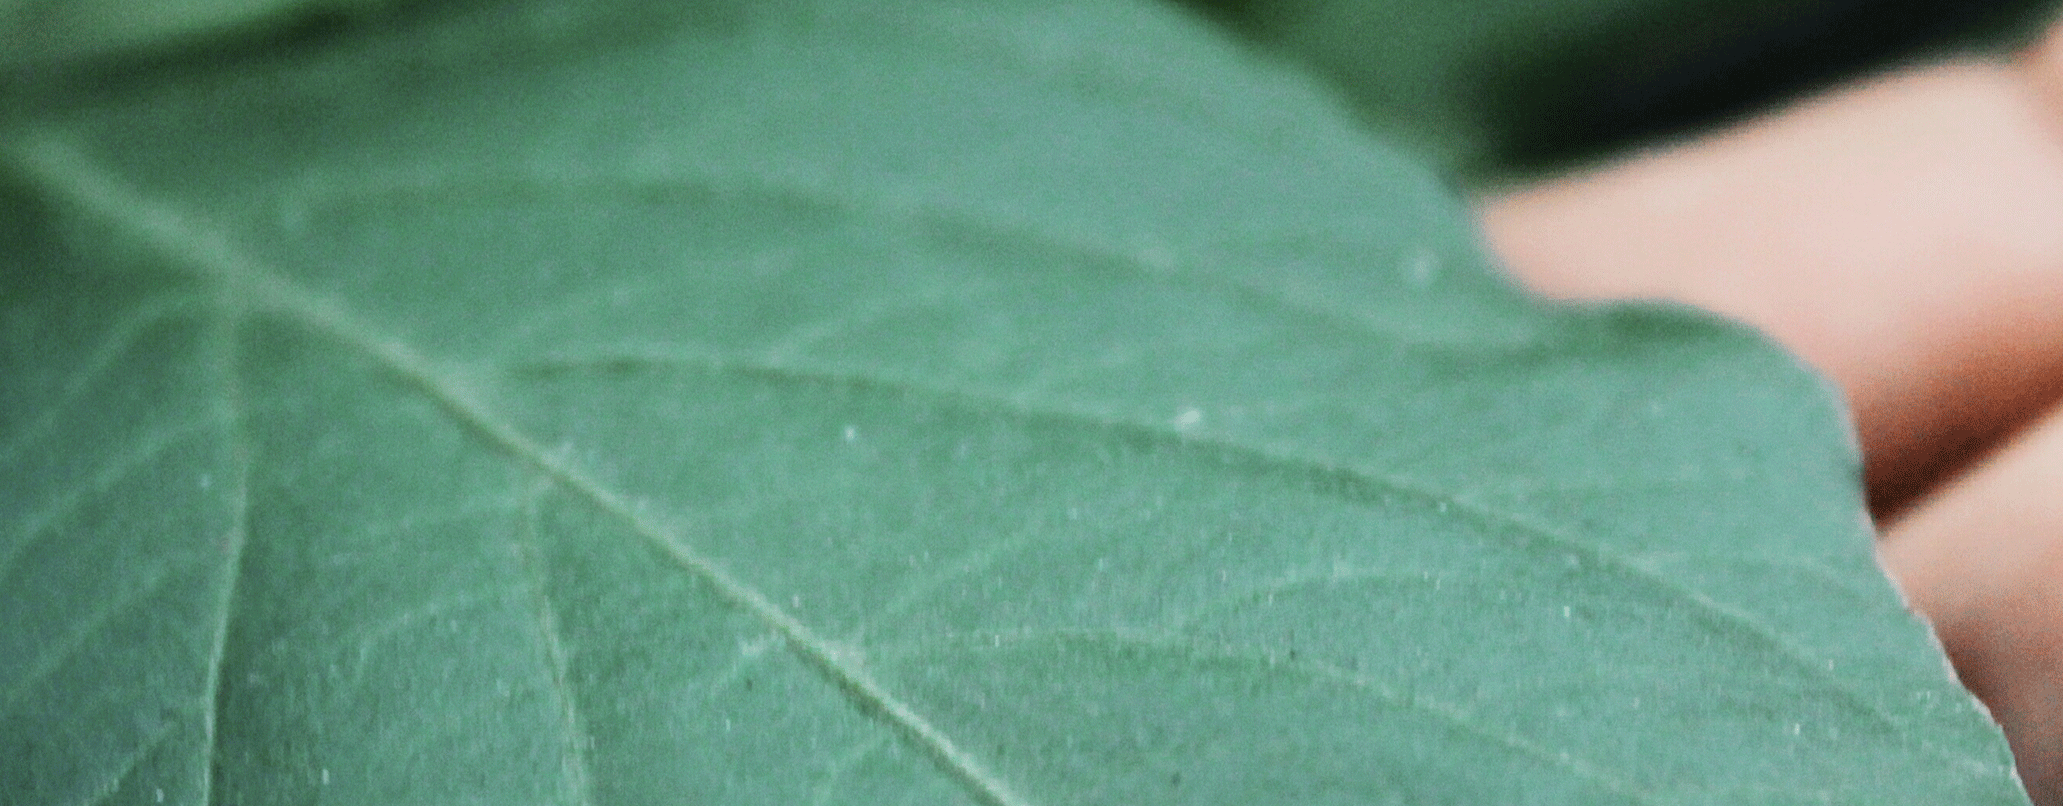 Groene blad